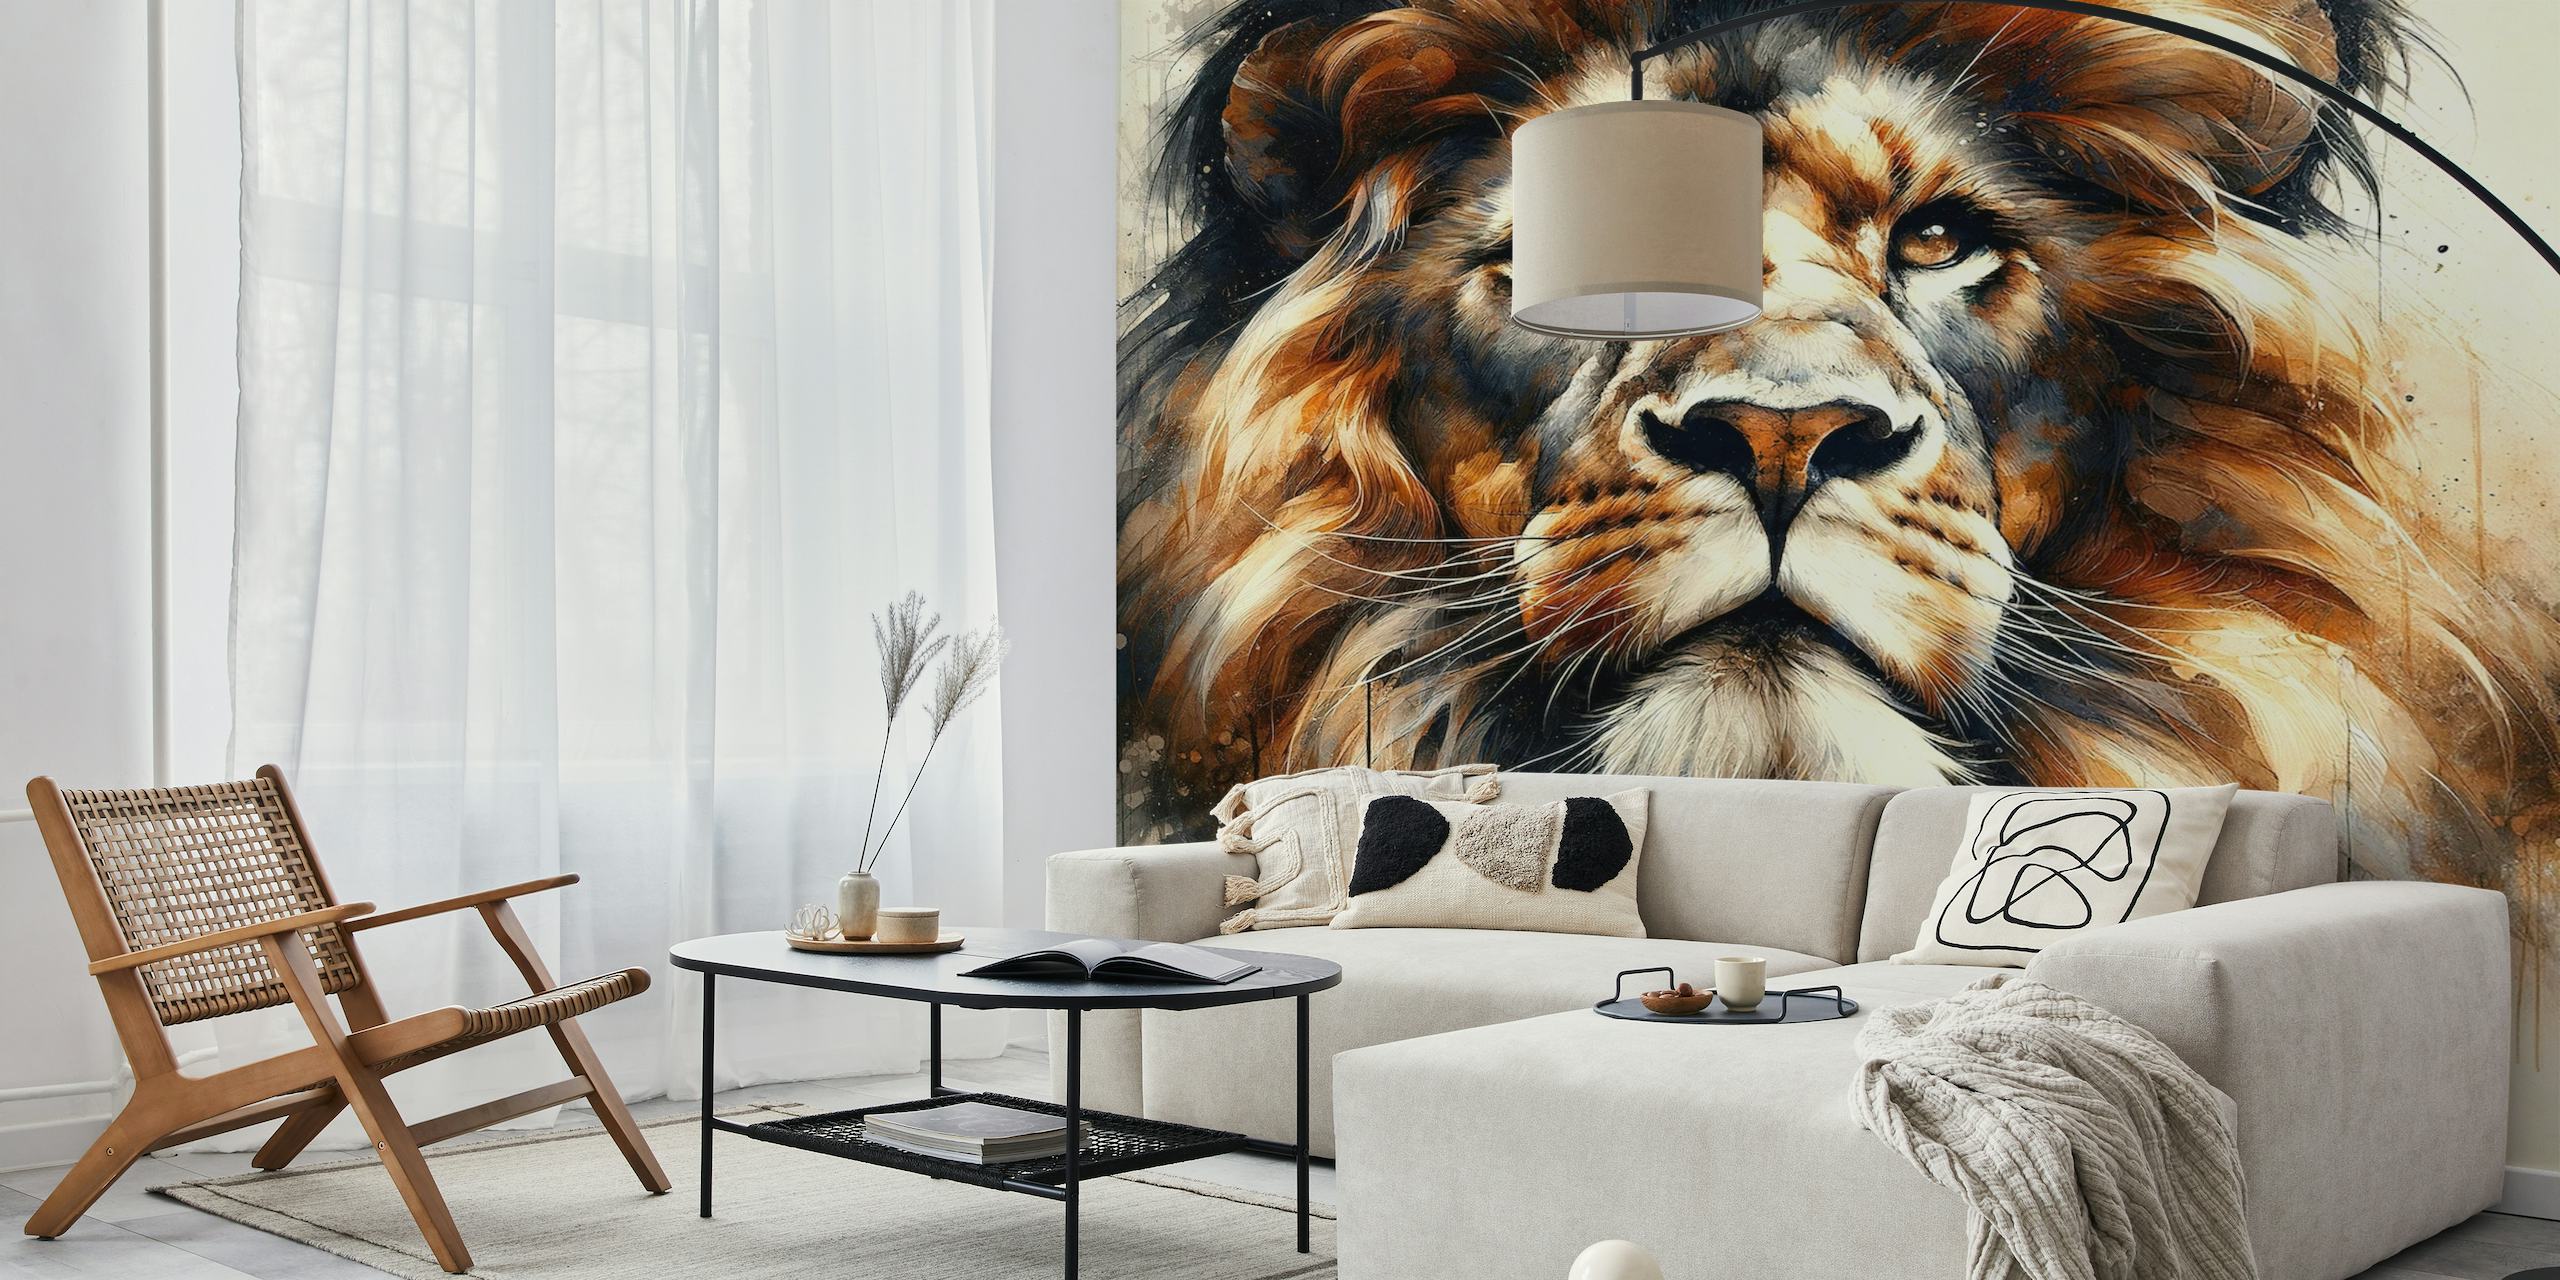 Powerful Lion wallpaper